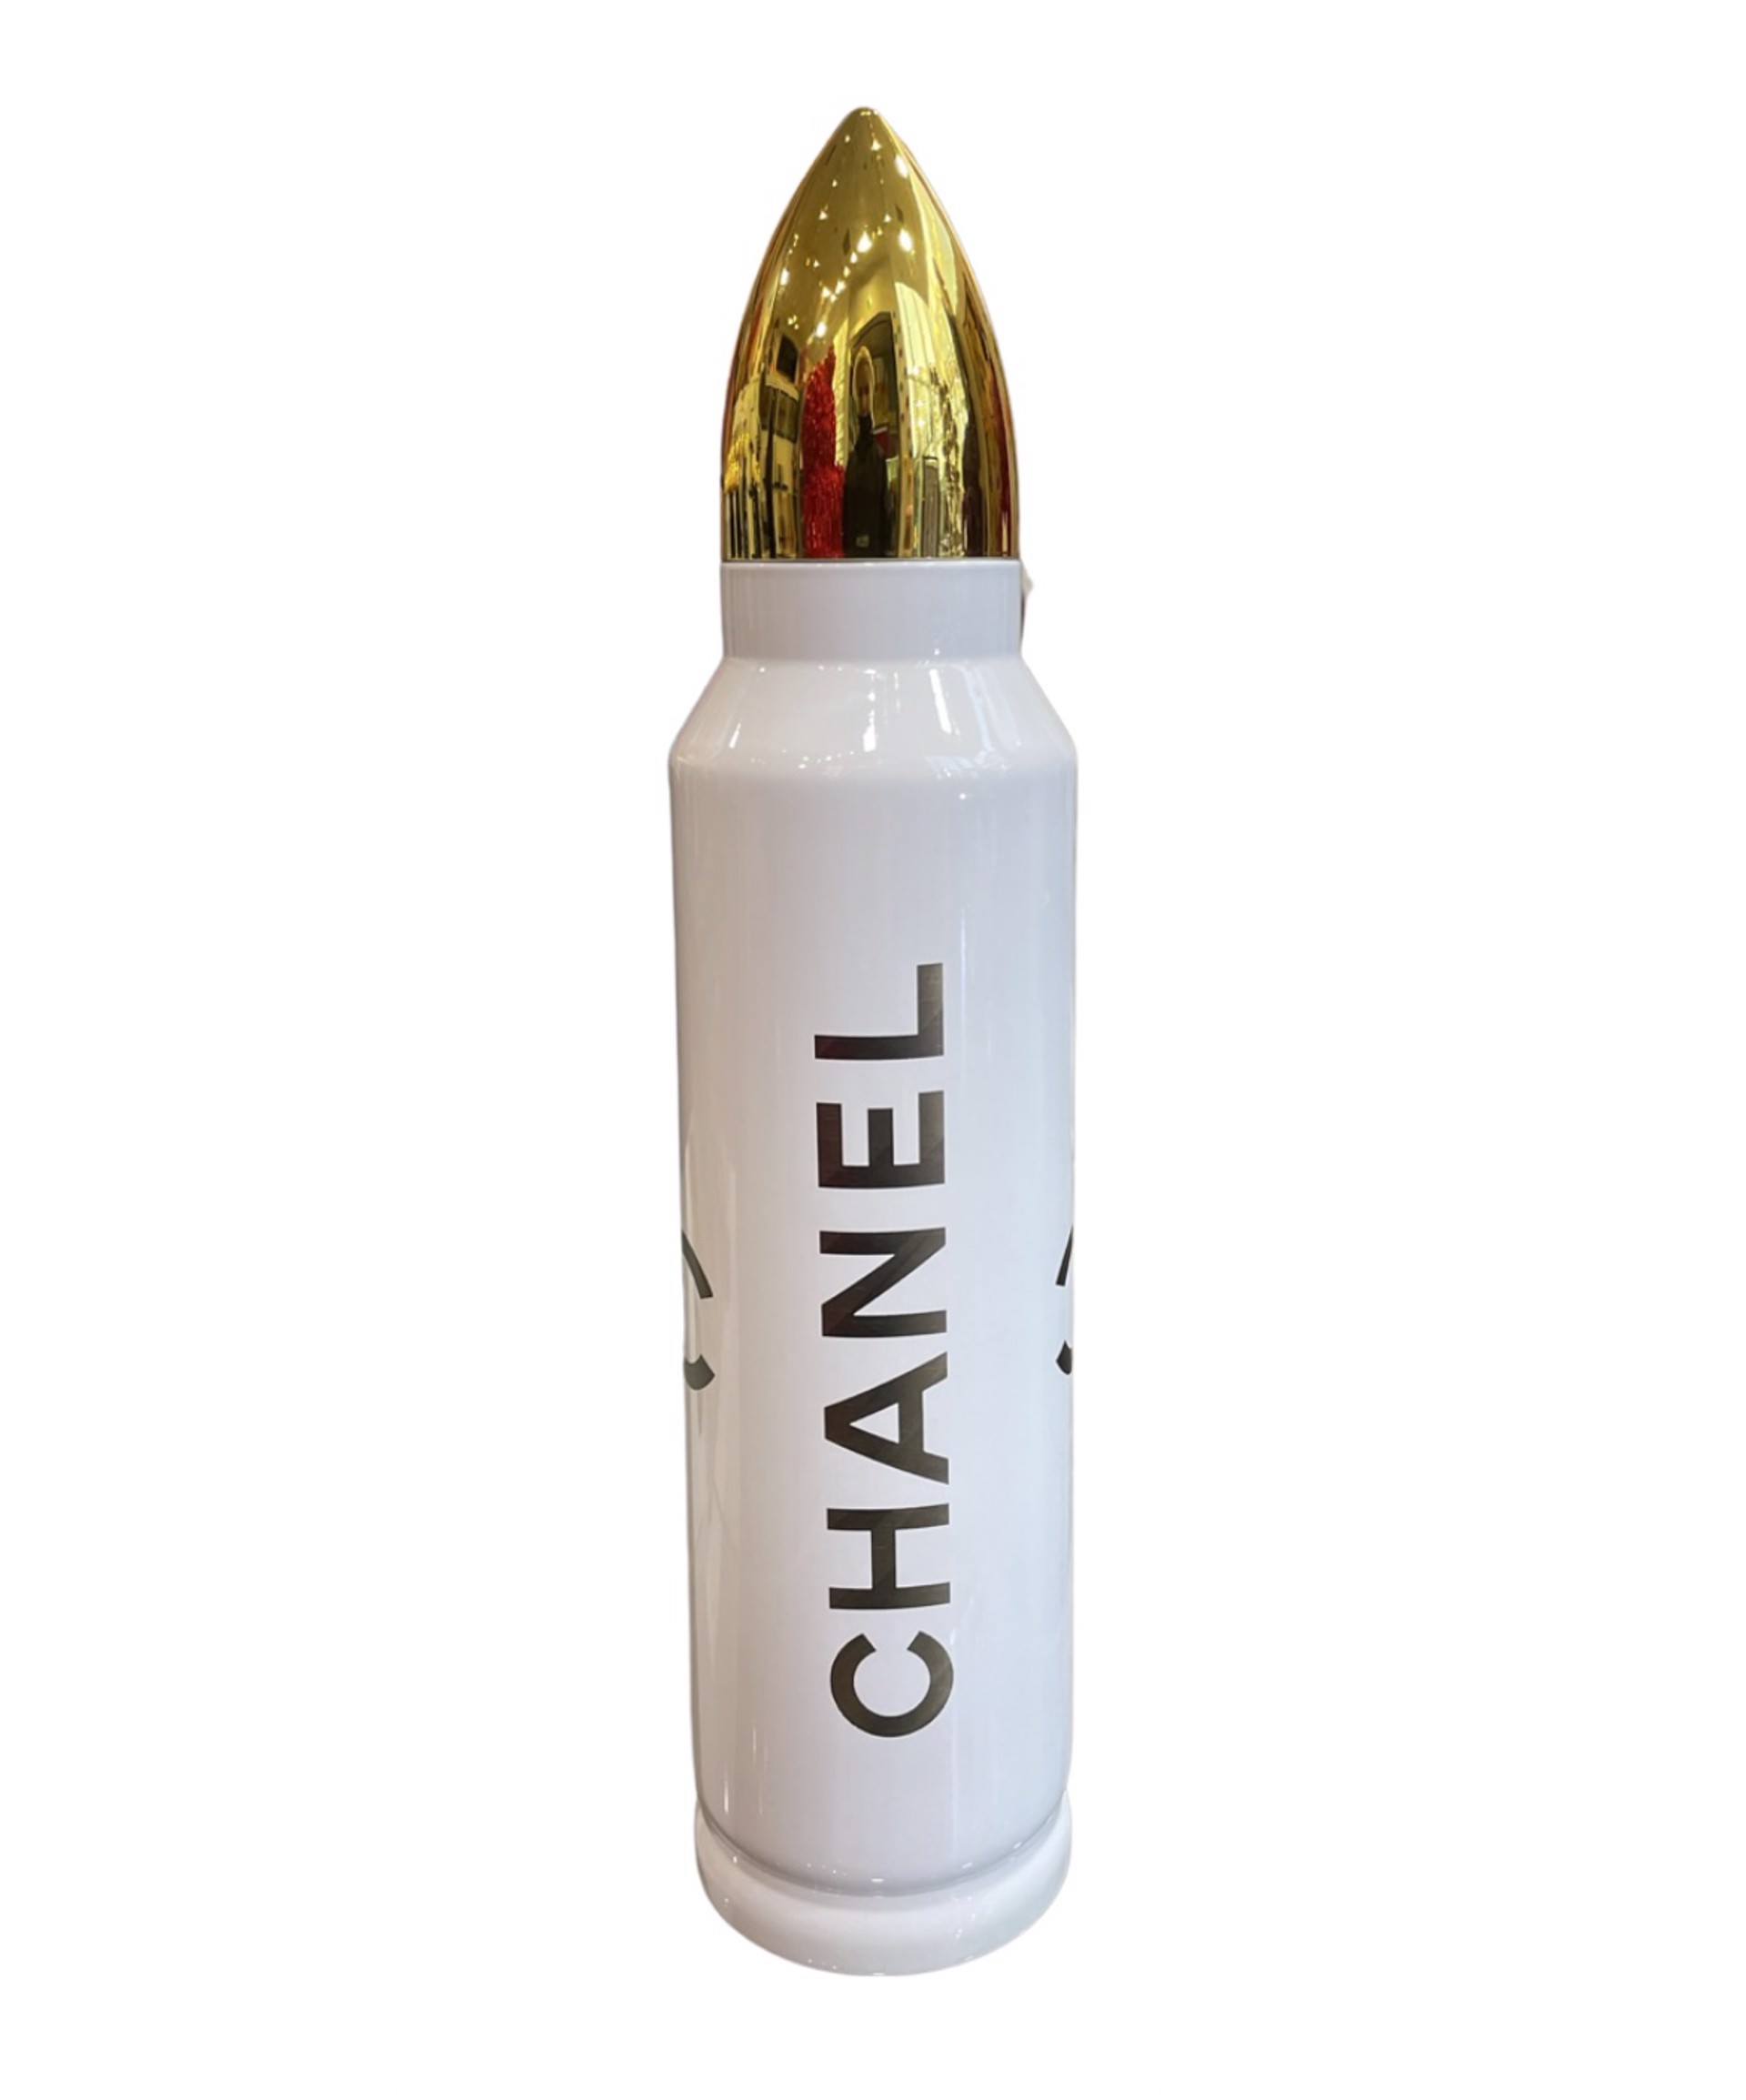 "Chanel" Large Black by "Peaceful Brand Bullets" by Efi Mashiah